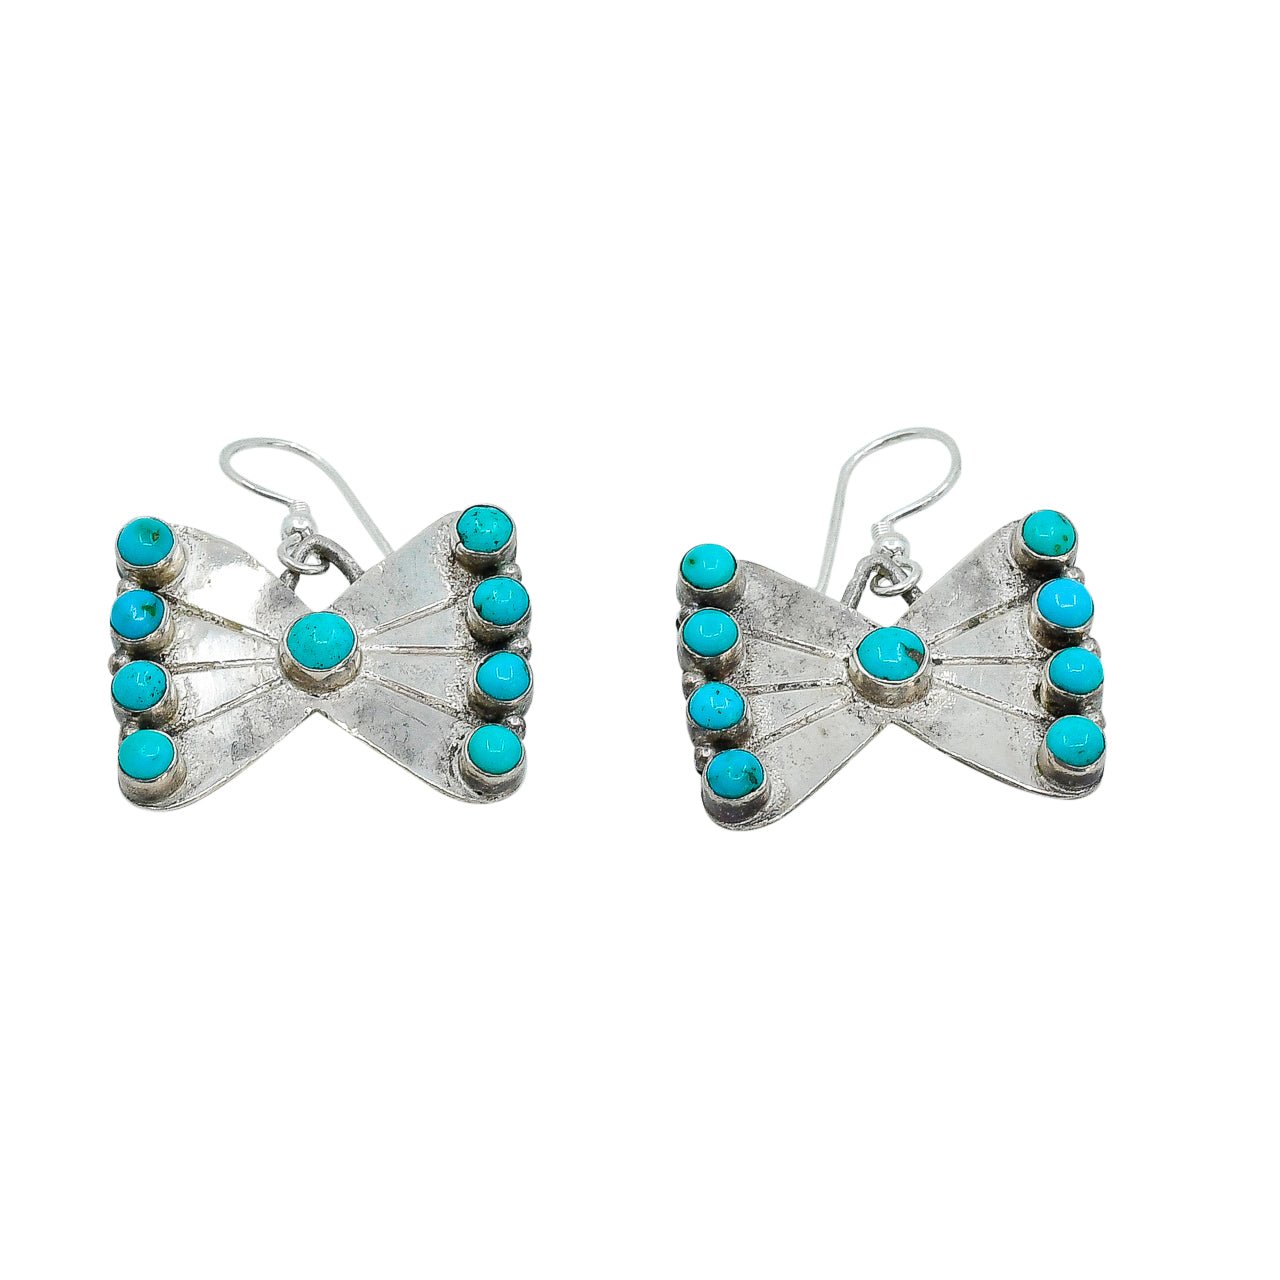 Vintage Navajo Earrings of Dangle Butterflies Set with Turquoise - Turquoise & Tufa